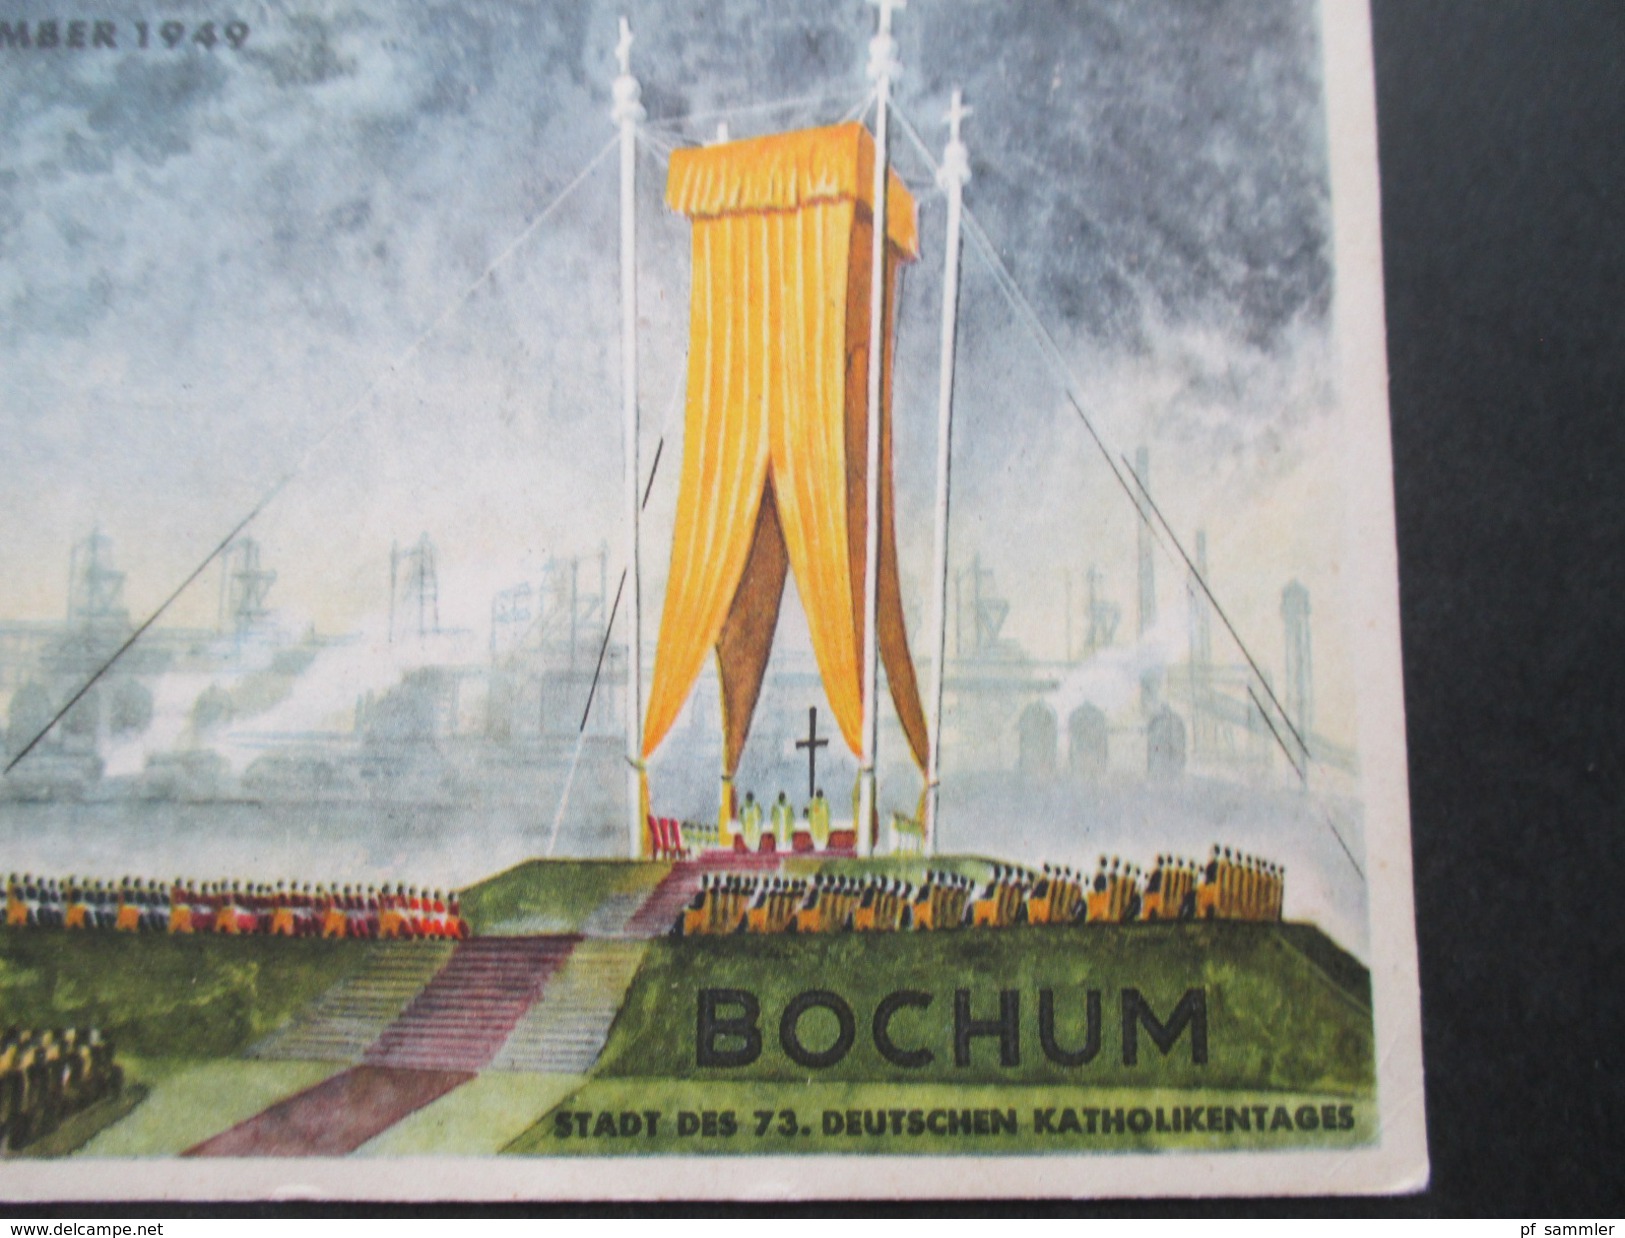 AK / Künstlerkarte Bochum Stadt Des 73. Deutschen Katholikentages. 1. - 4. September. 1949 Aquarell Kurt Hubert Vieth. - Cristianesimo